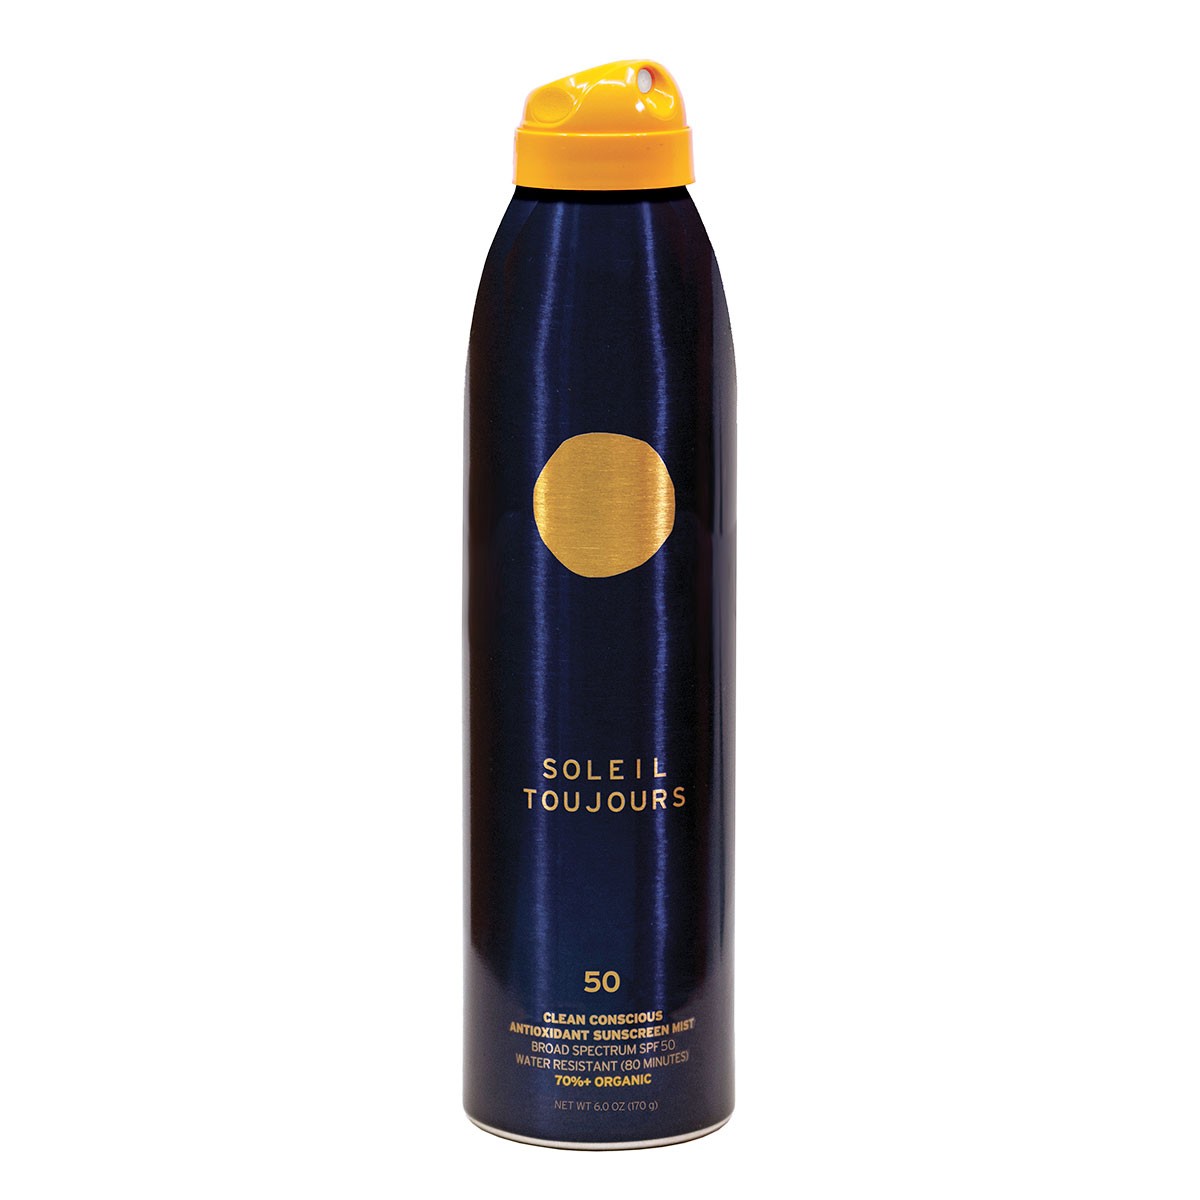 Soleil Toujours SPF 50 Clean Conscious Antioxidant Sunscreen Mist - crema solar natural